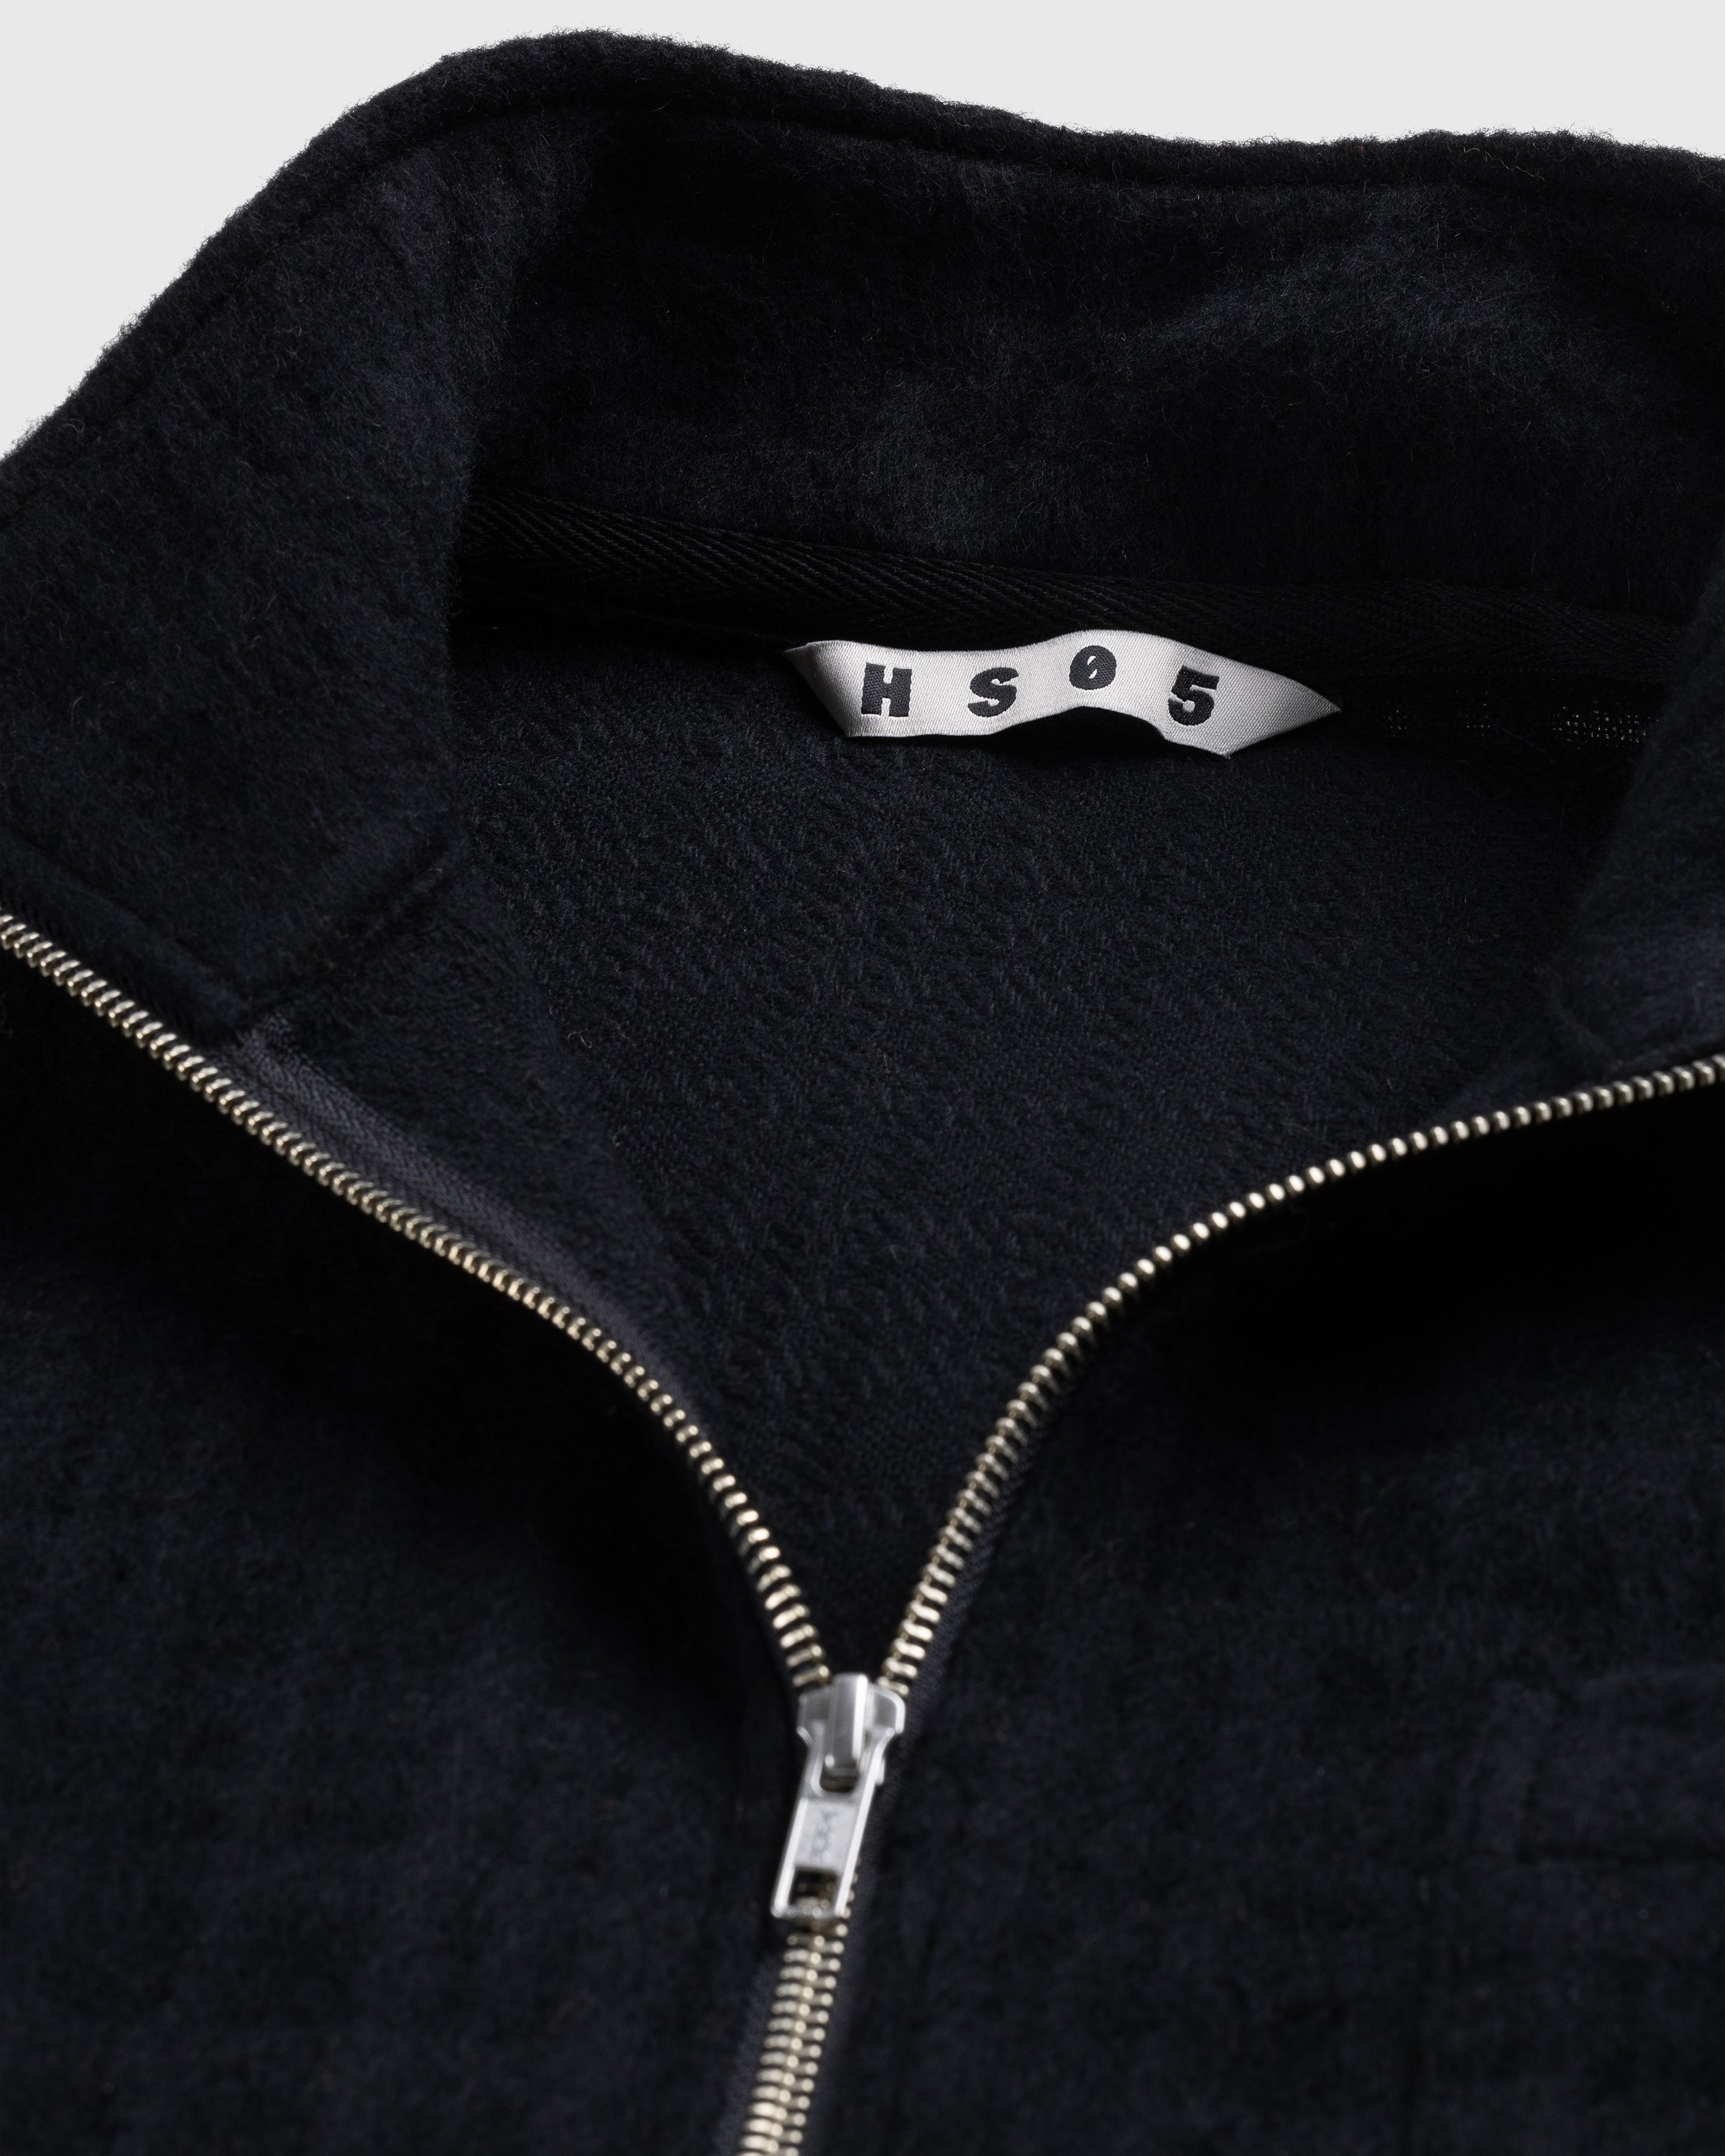 Highsnobiety HS05 - Recycle Wool Blend Fleece Quarter Zip Black - Clothing - Black - Image 6